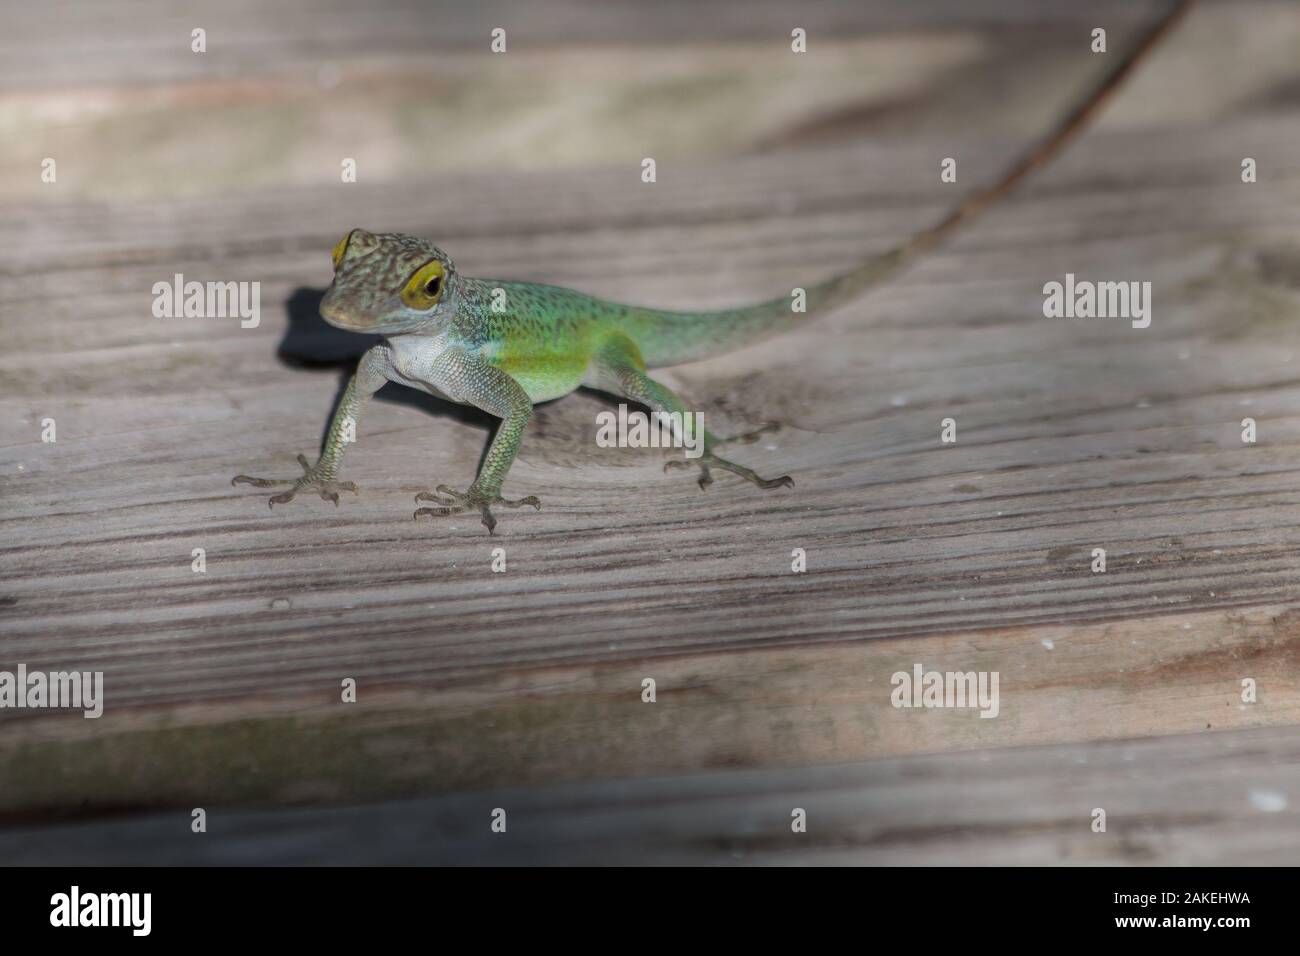 A little Green Tree Lizard on the Caribbean island of Antigua Stock Photo